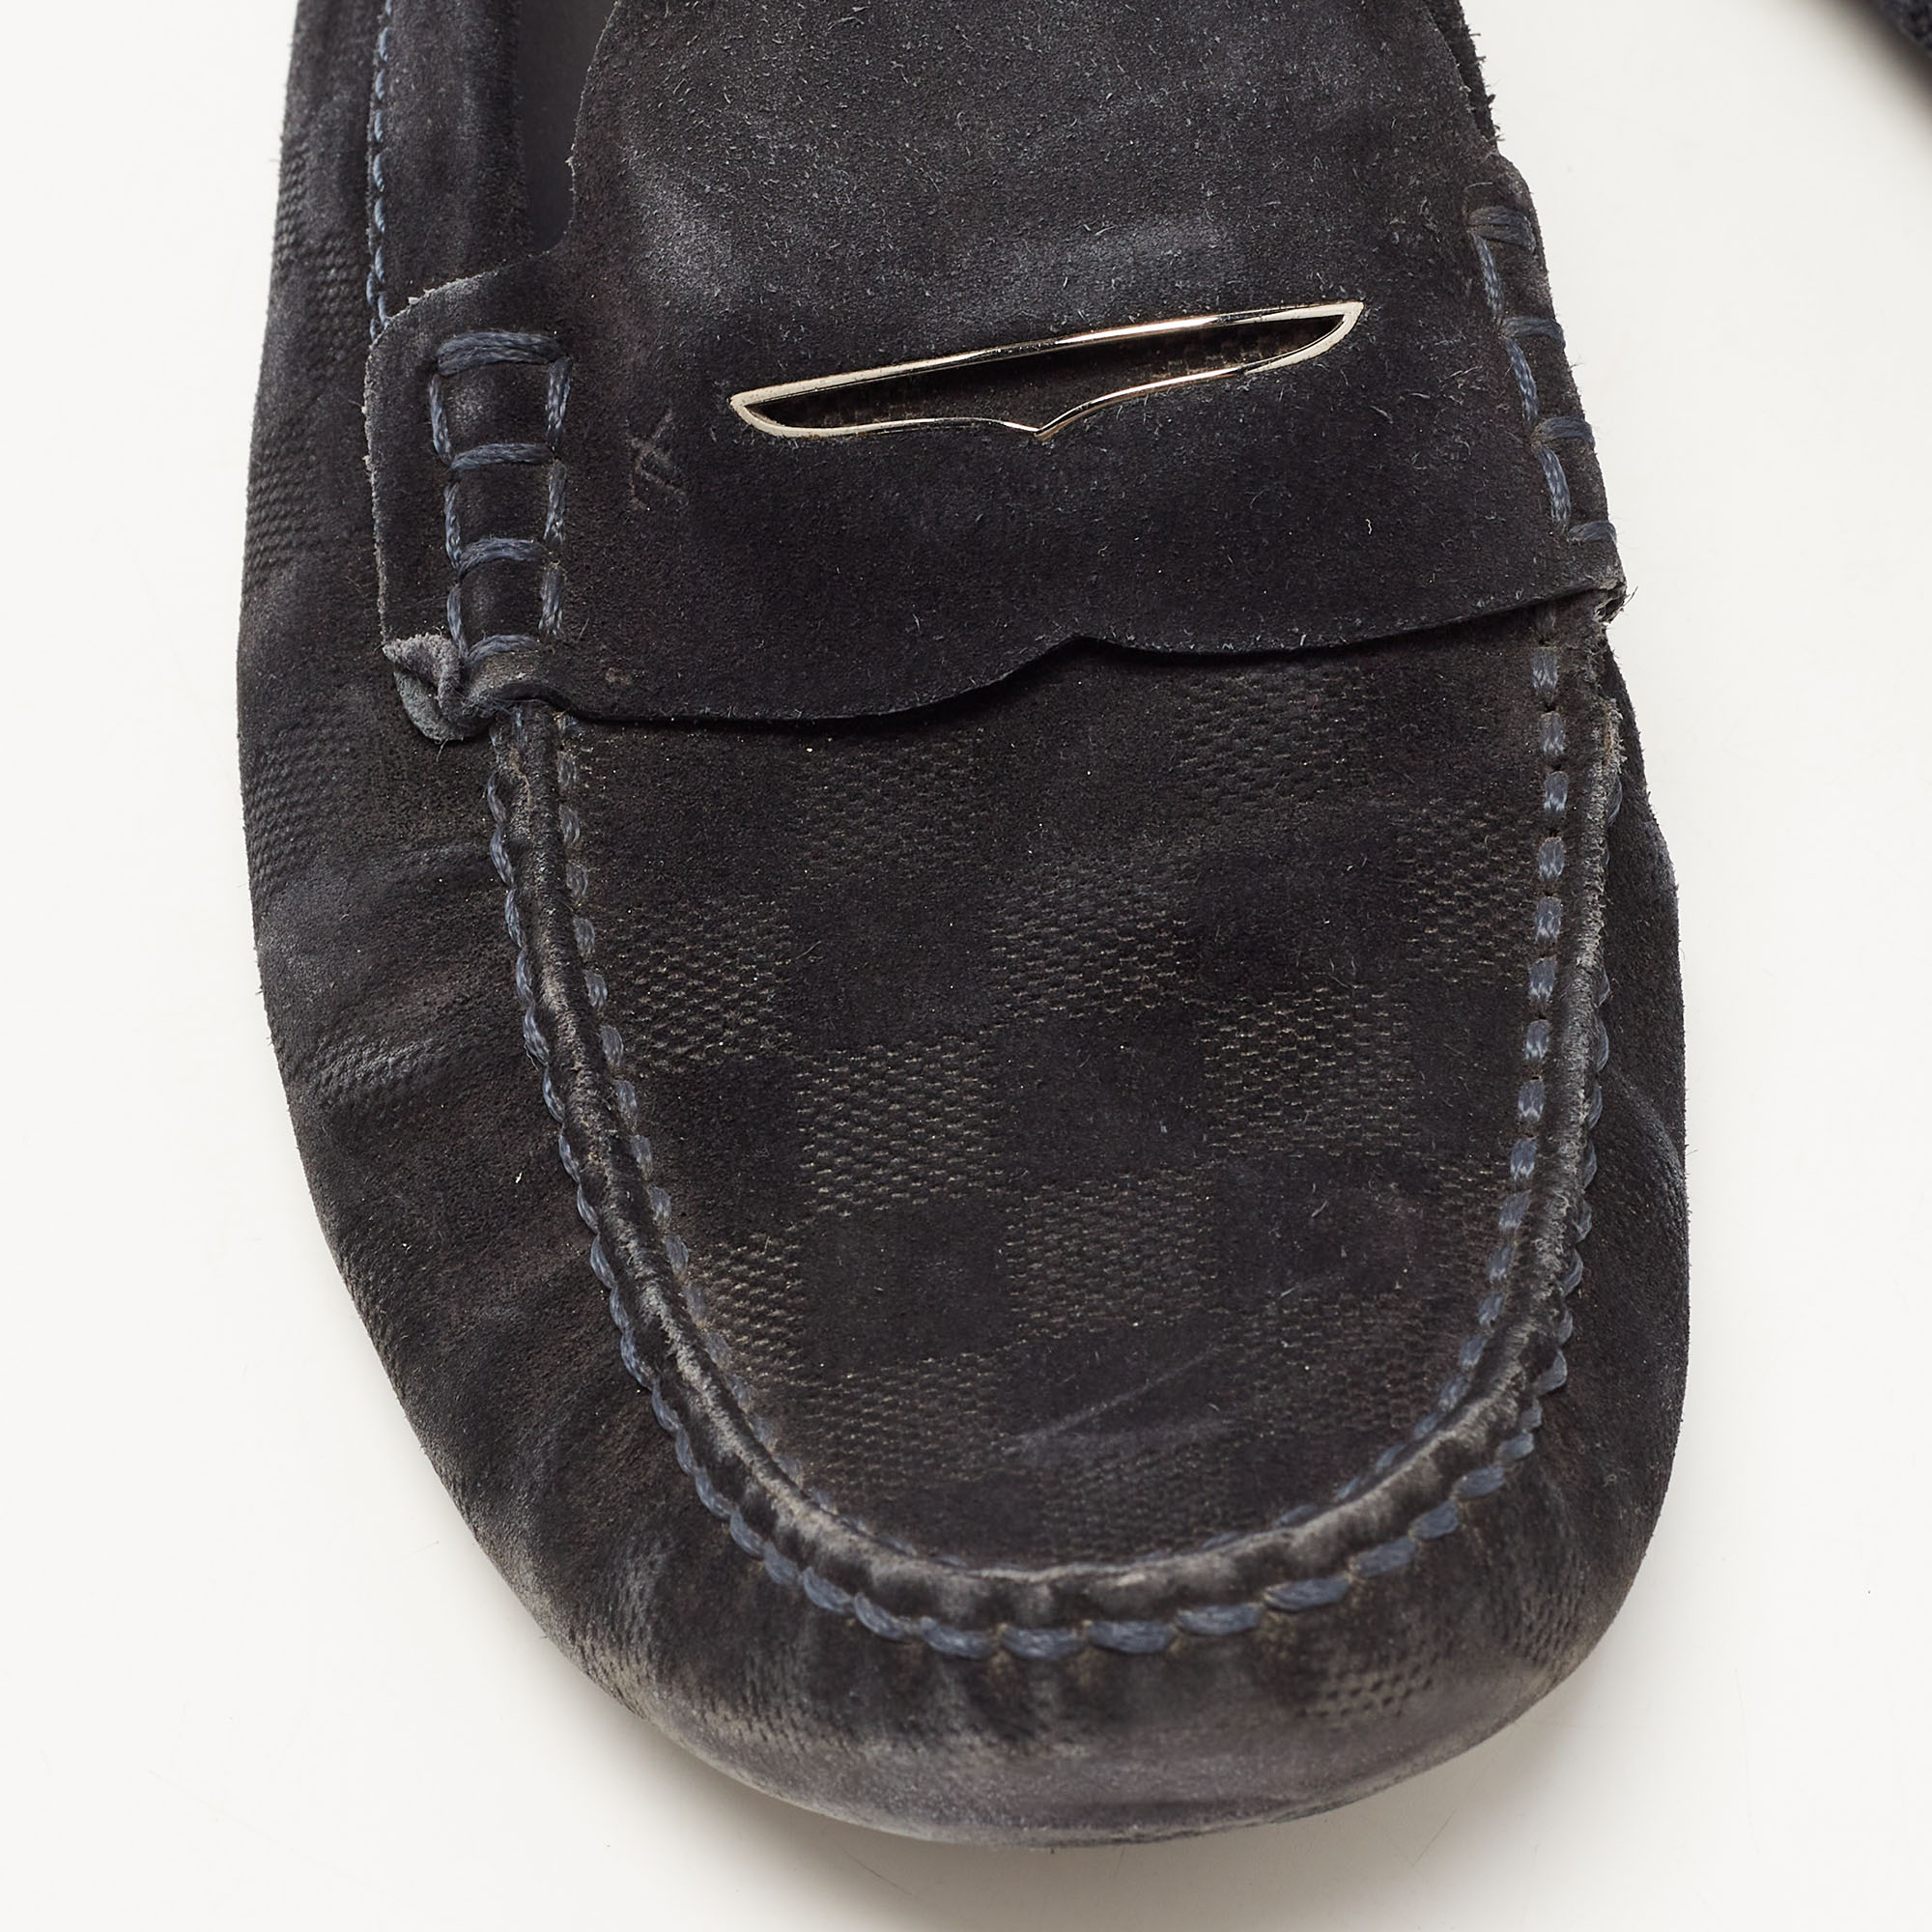 Louis Vuitton Black Suede Monte Carlo Loafers Size 43.5